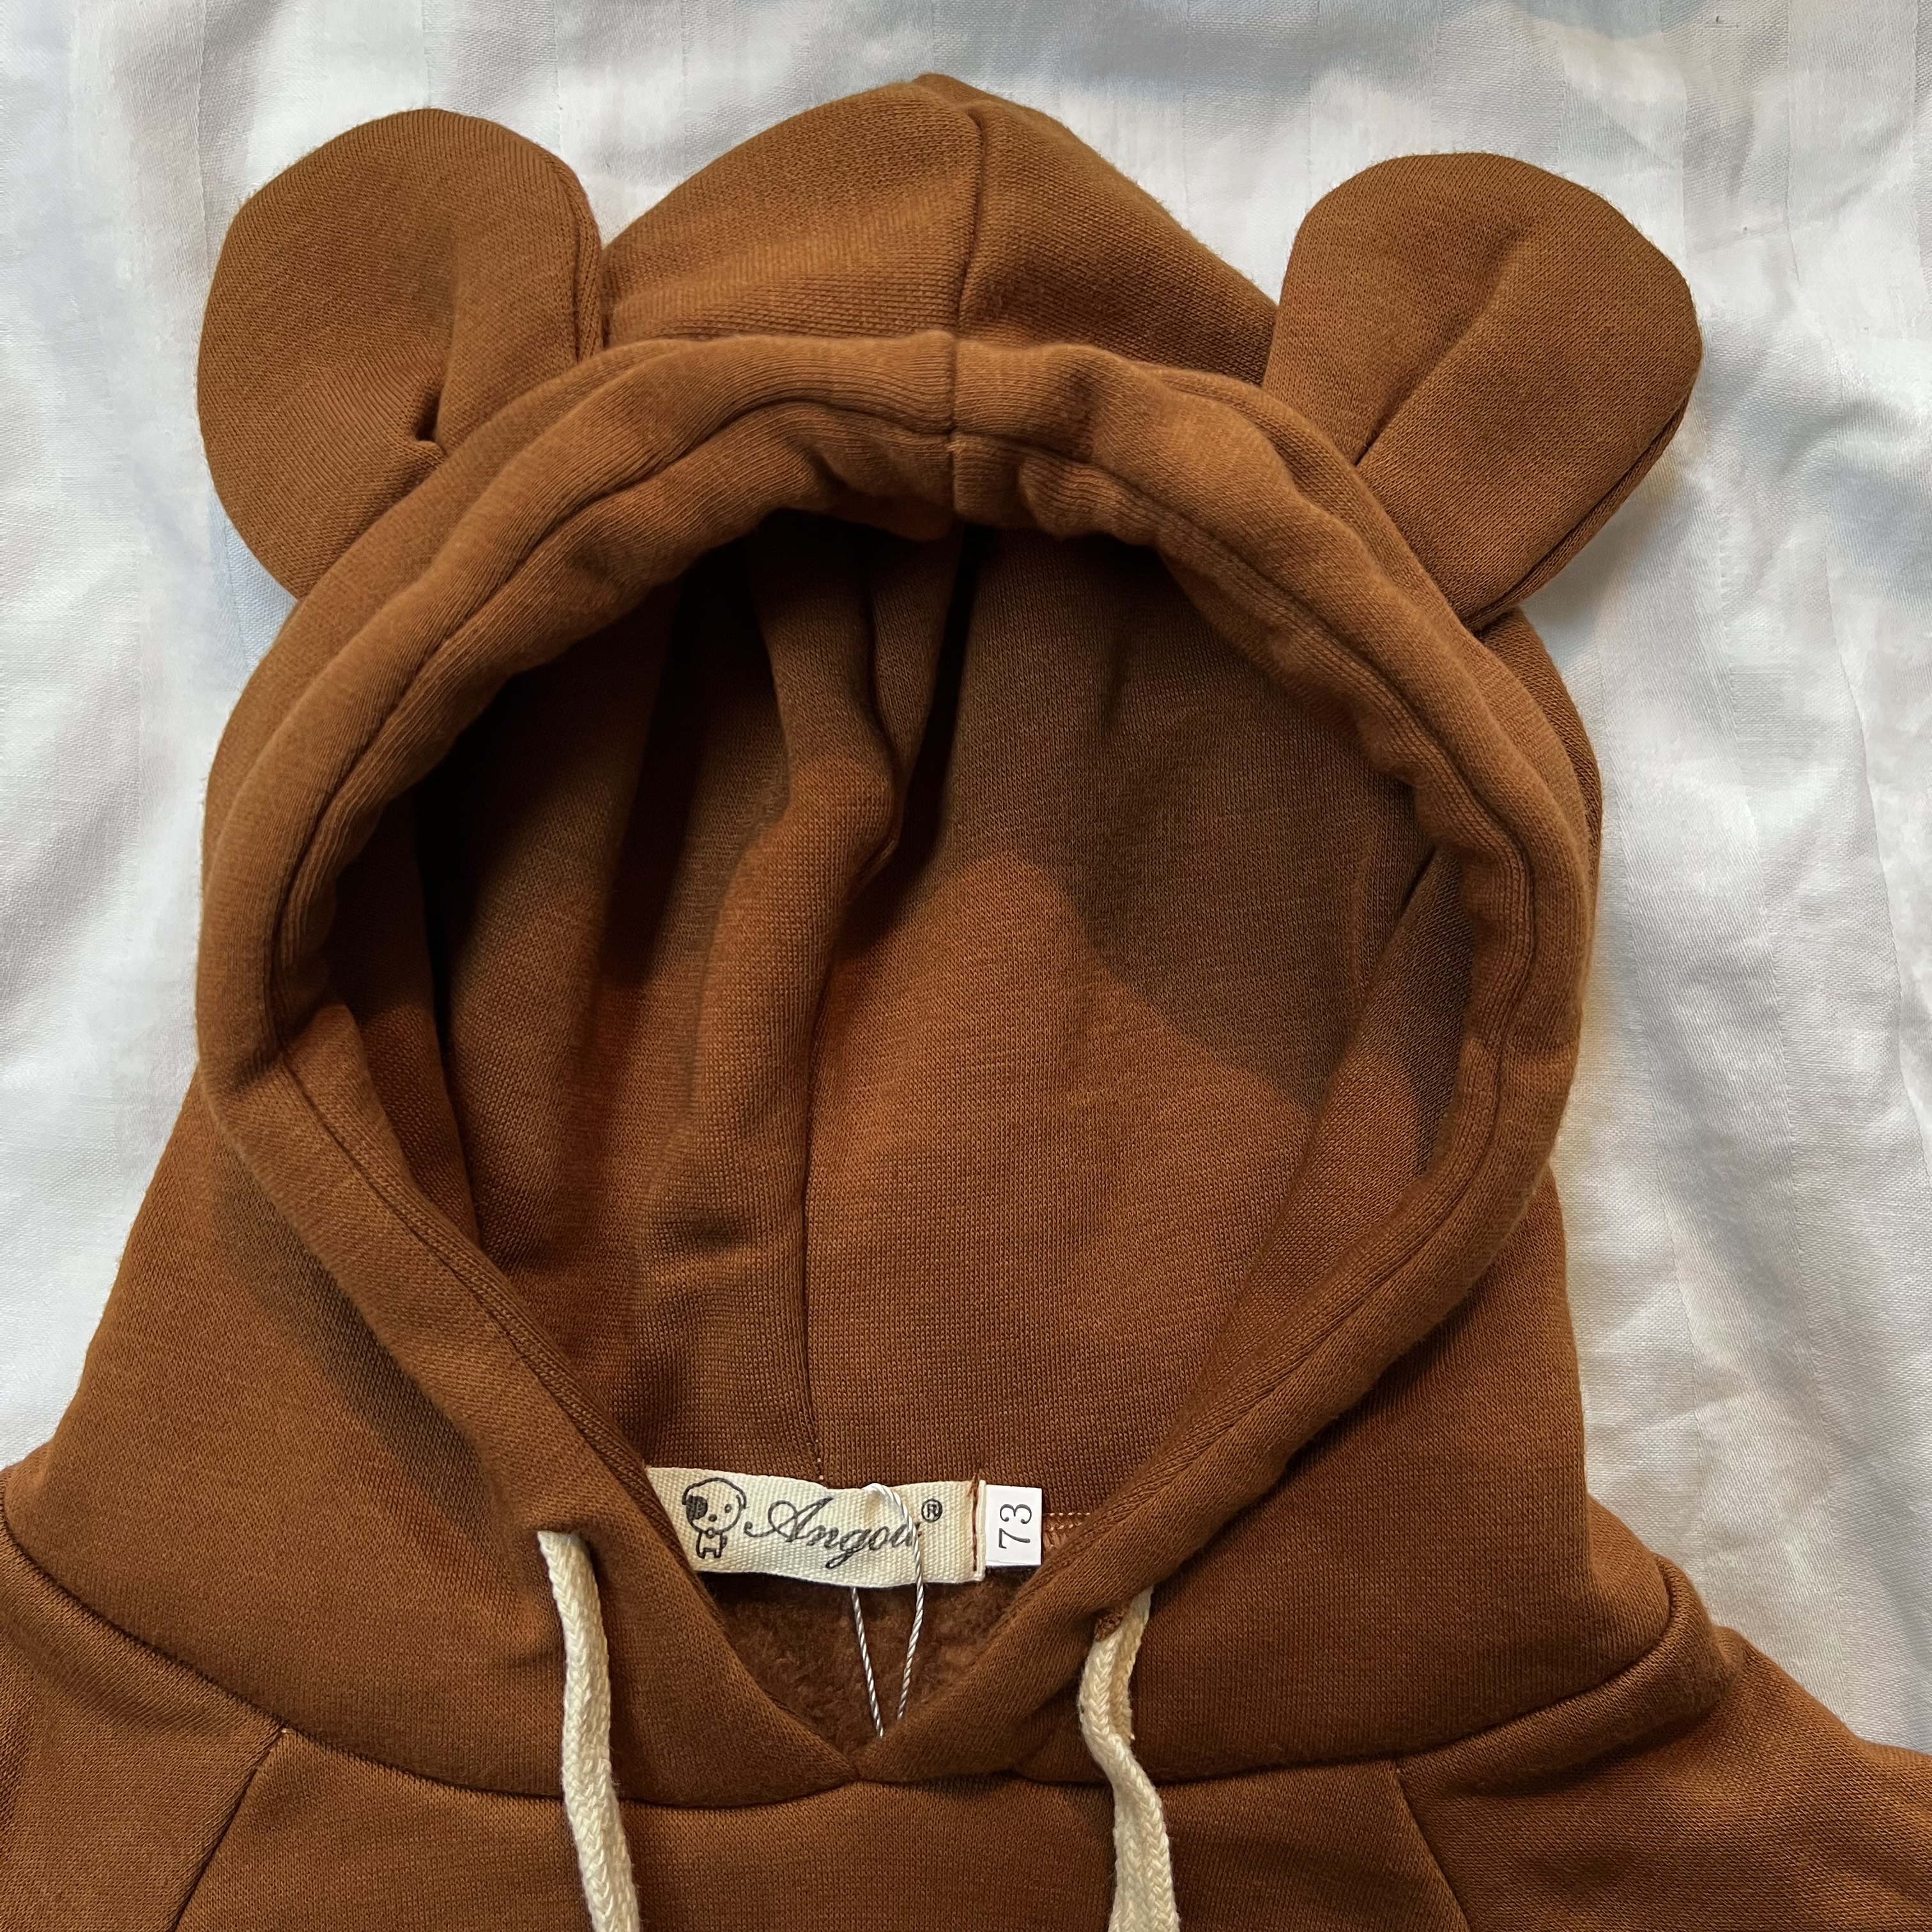 Hoodie / Body with bears ears (soft inside)